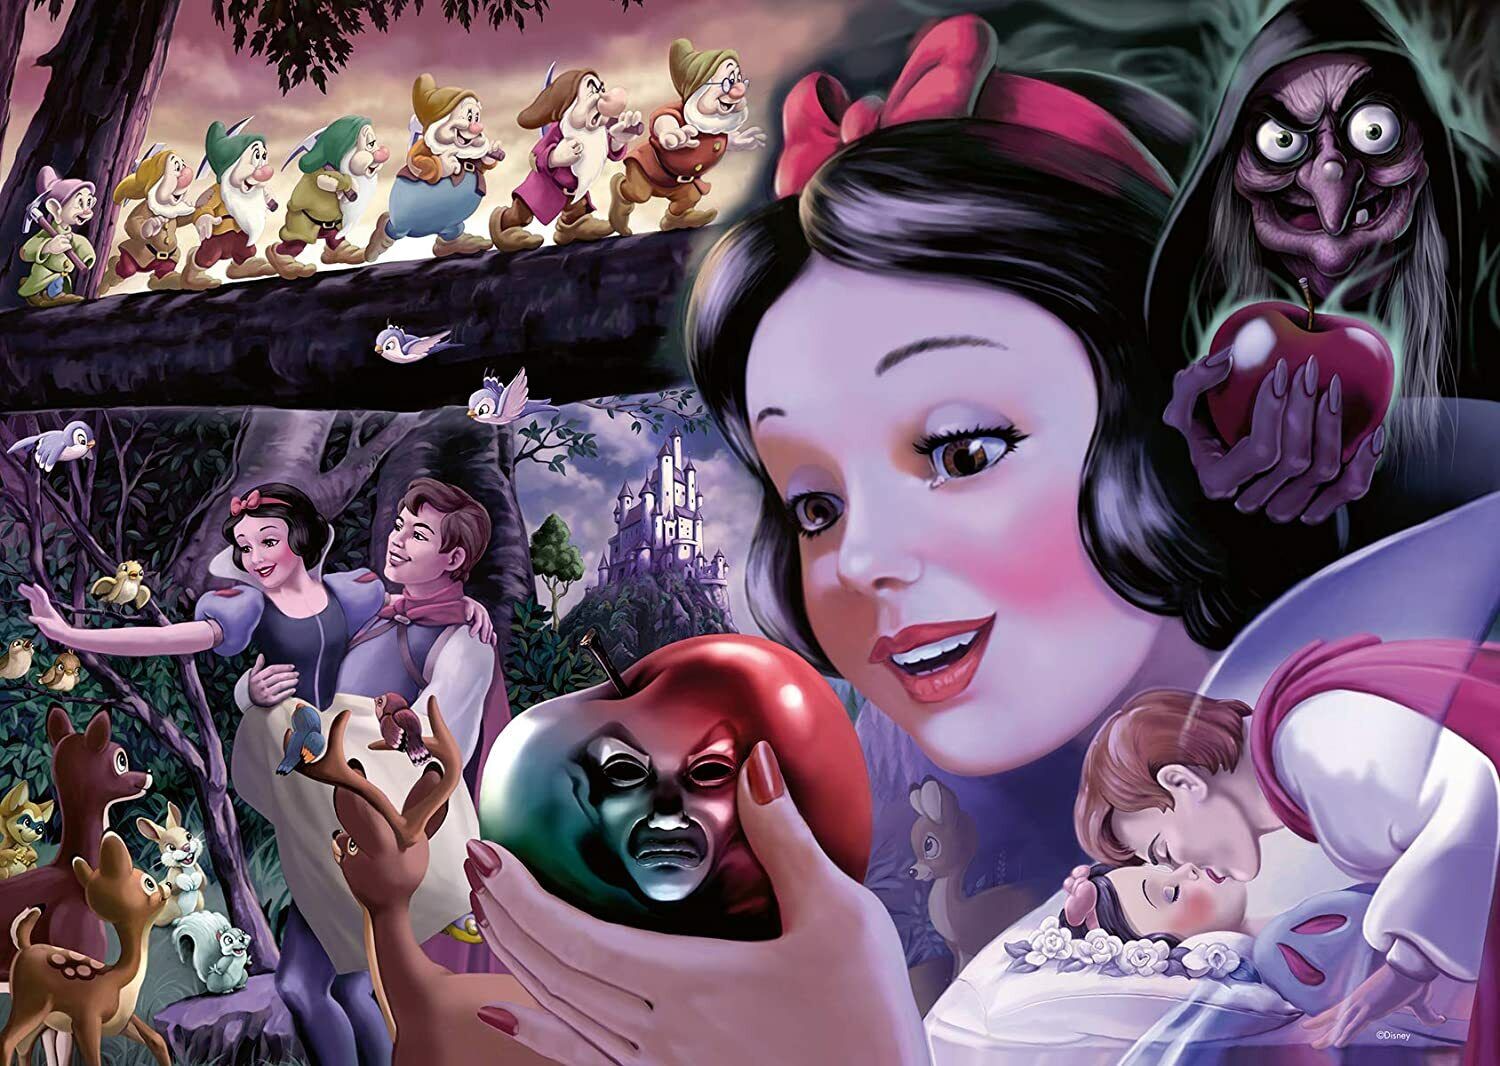 New Ravensburger Disney Princess Snow White Puzzle - 1000 Pieces - Collector's E